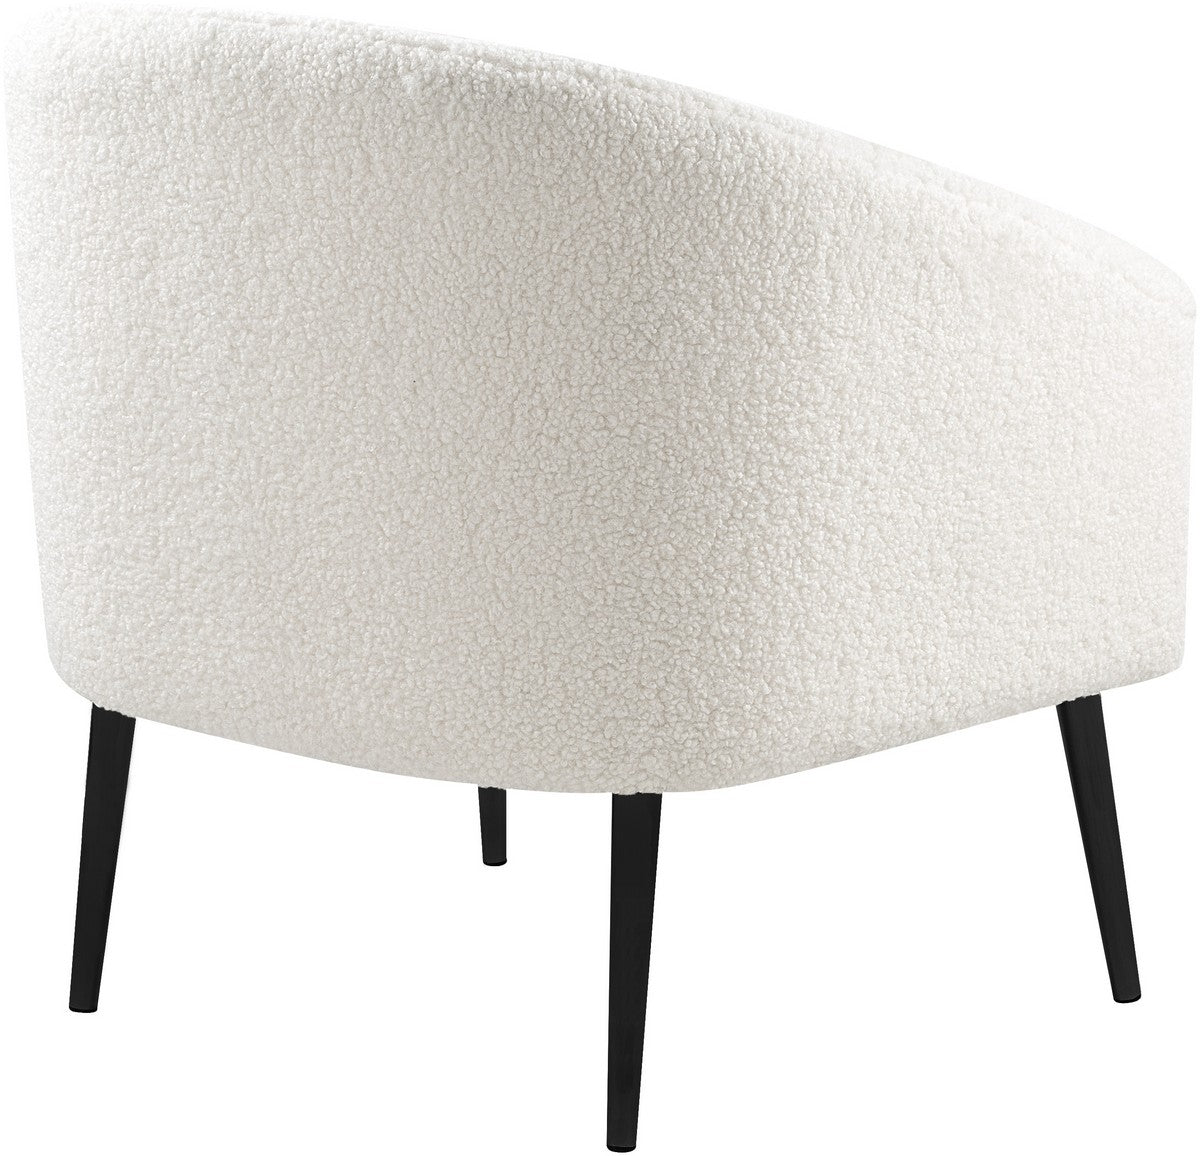 Meridian Furniture Barlow White Faux Sheepskin Fur Accent Chair